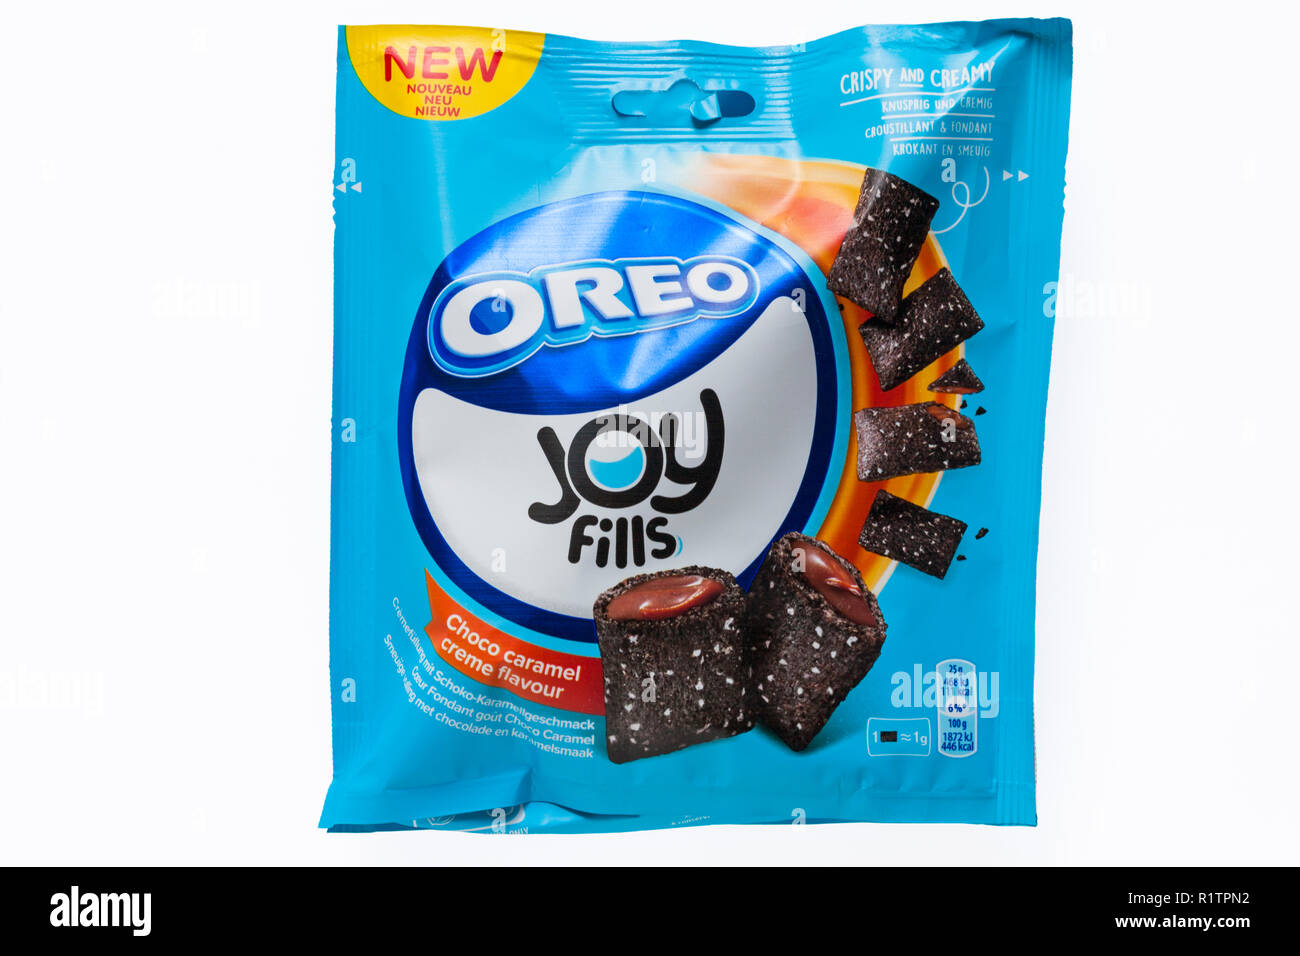 Packet of Oreo Joy Fills Choco caramel creme flavour crispy and creamy isolated on white background Stock Photo